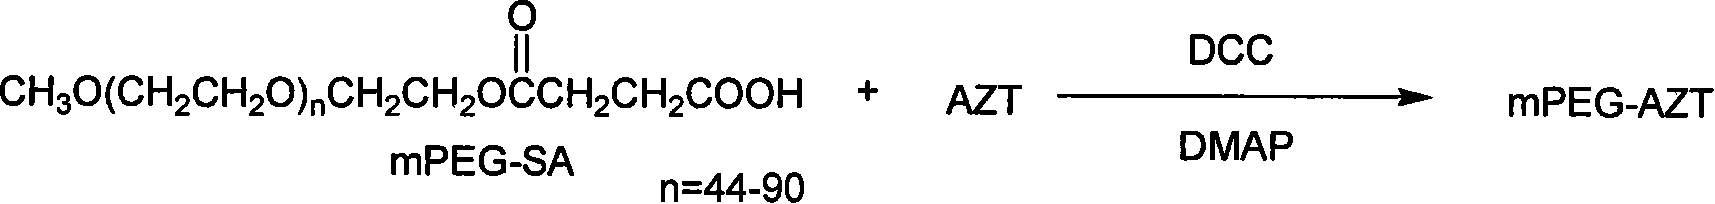 Polyesthylene glycol modified zidovudine conjugate and its prepn process and application